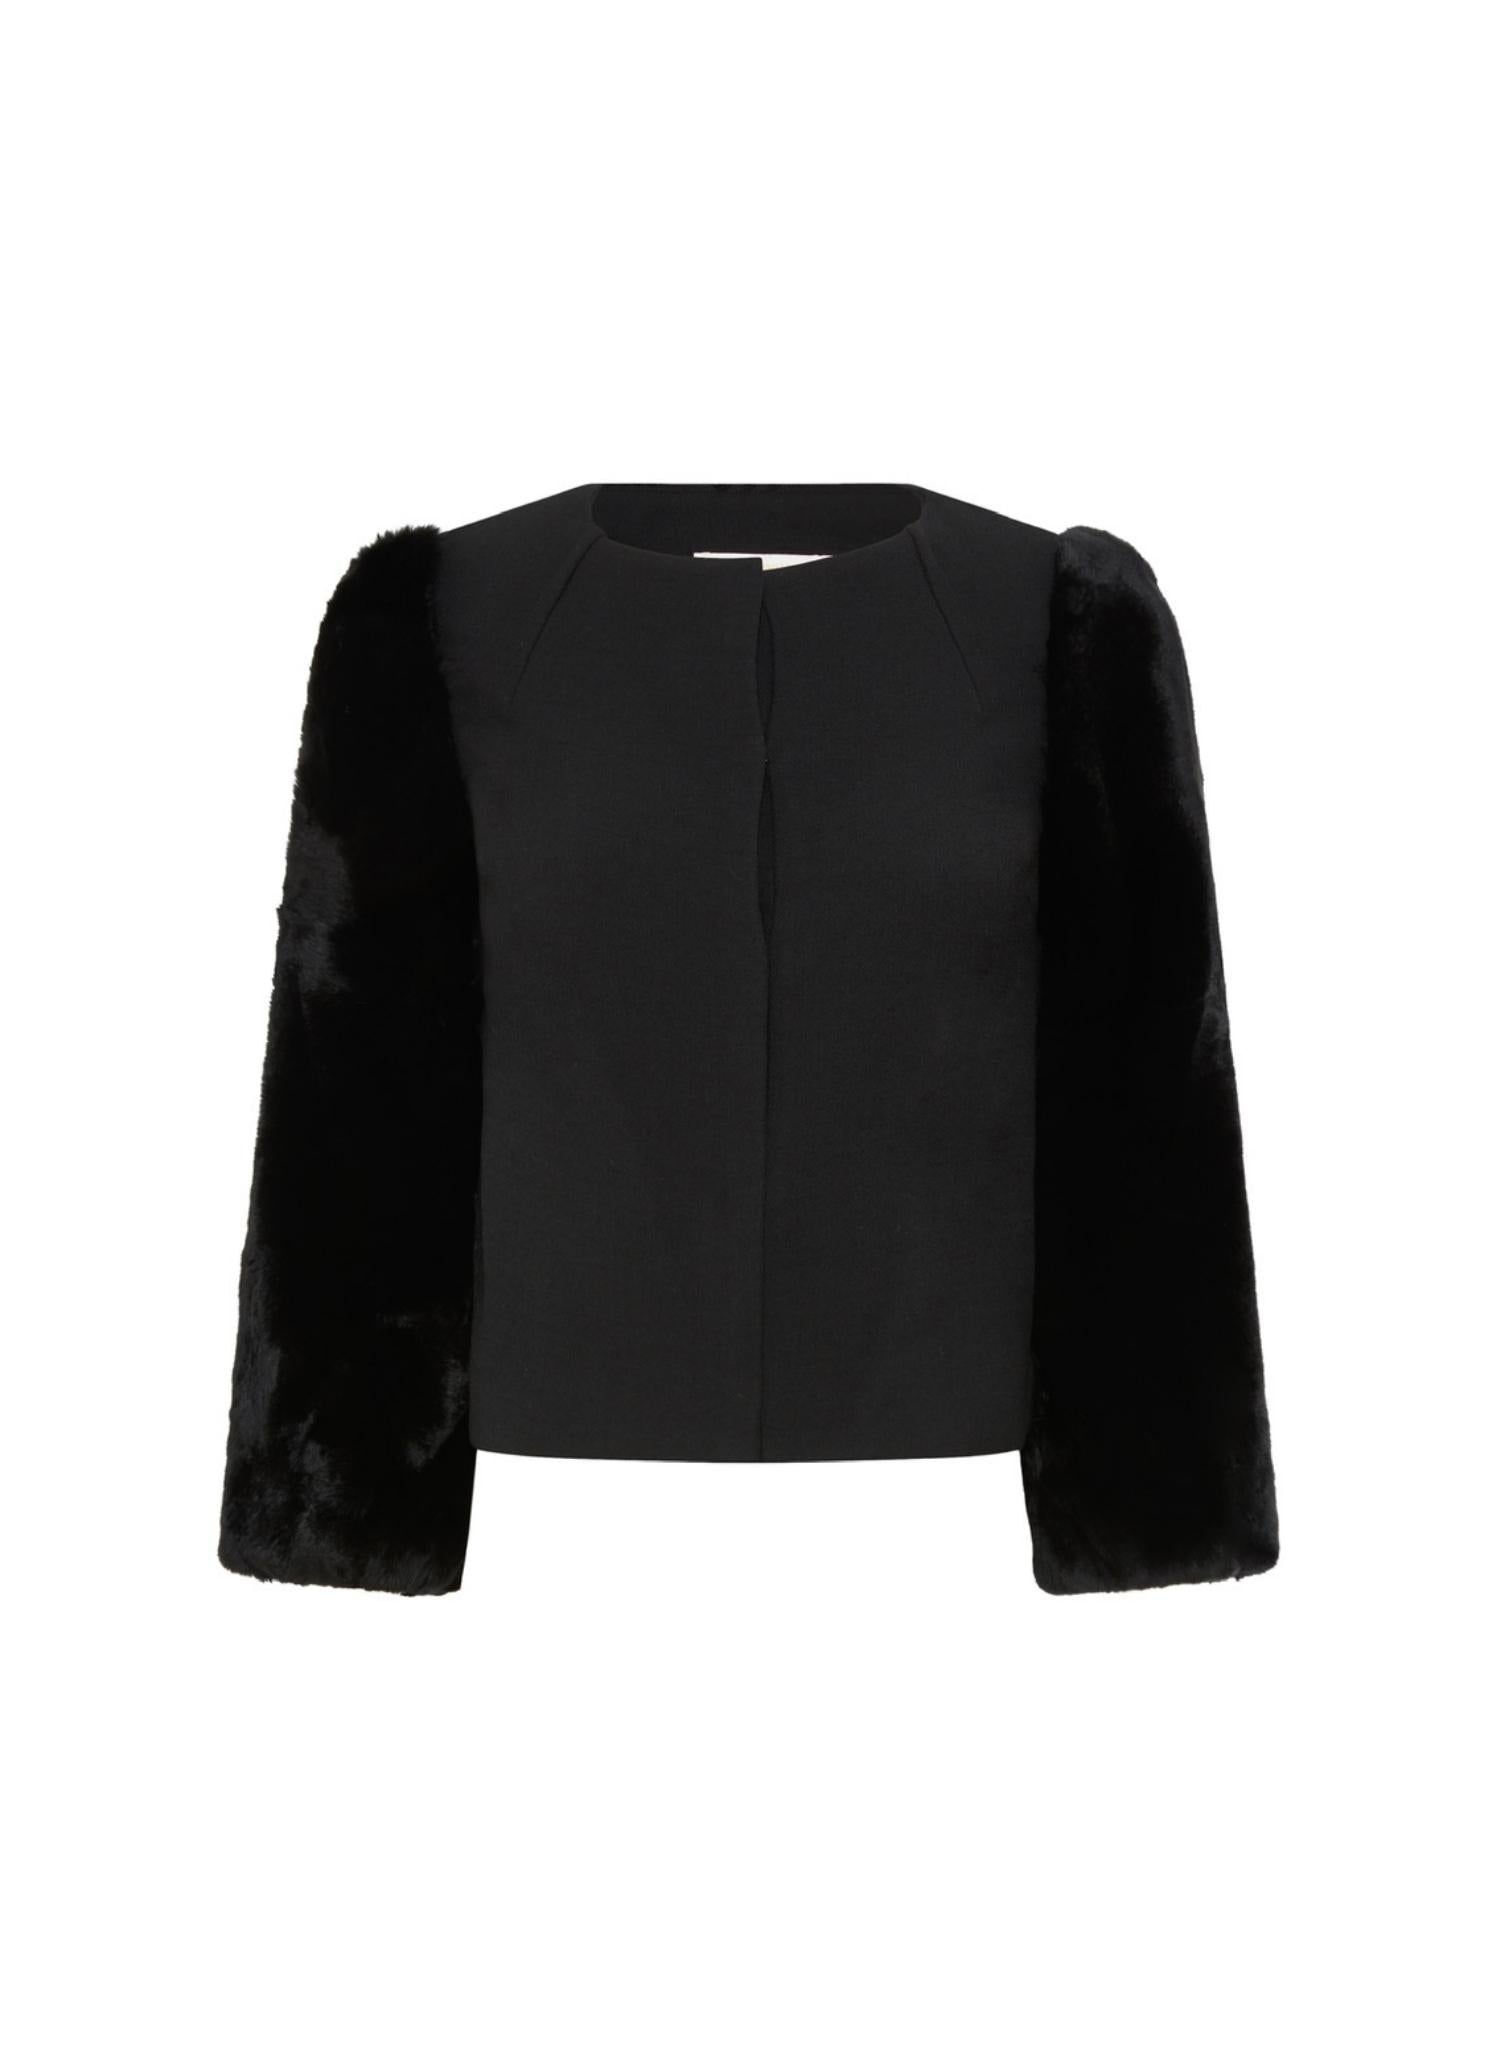 Womens Black Jacket Fur Sleeves Front Closure